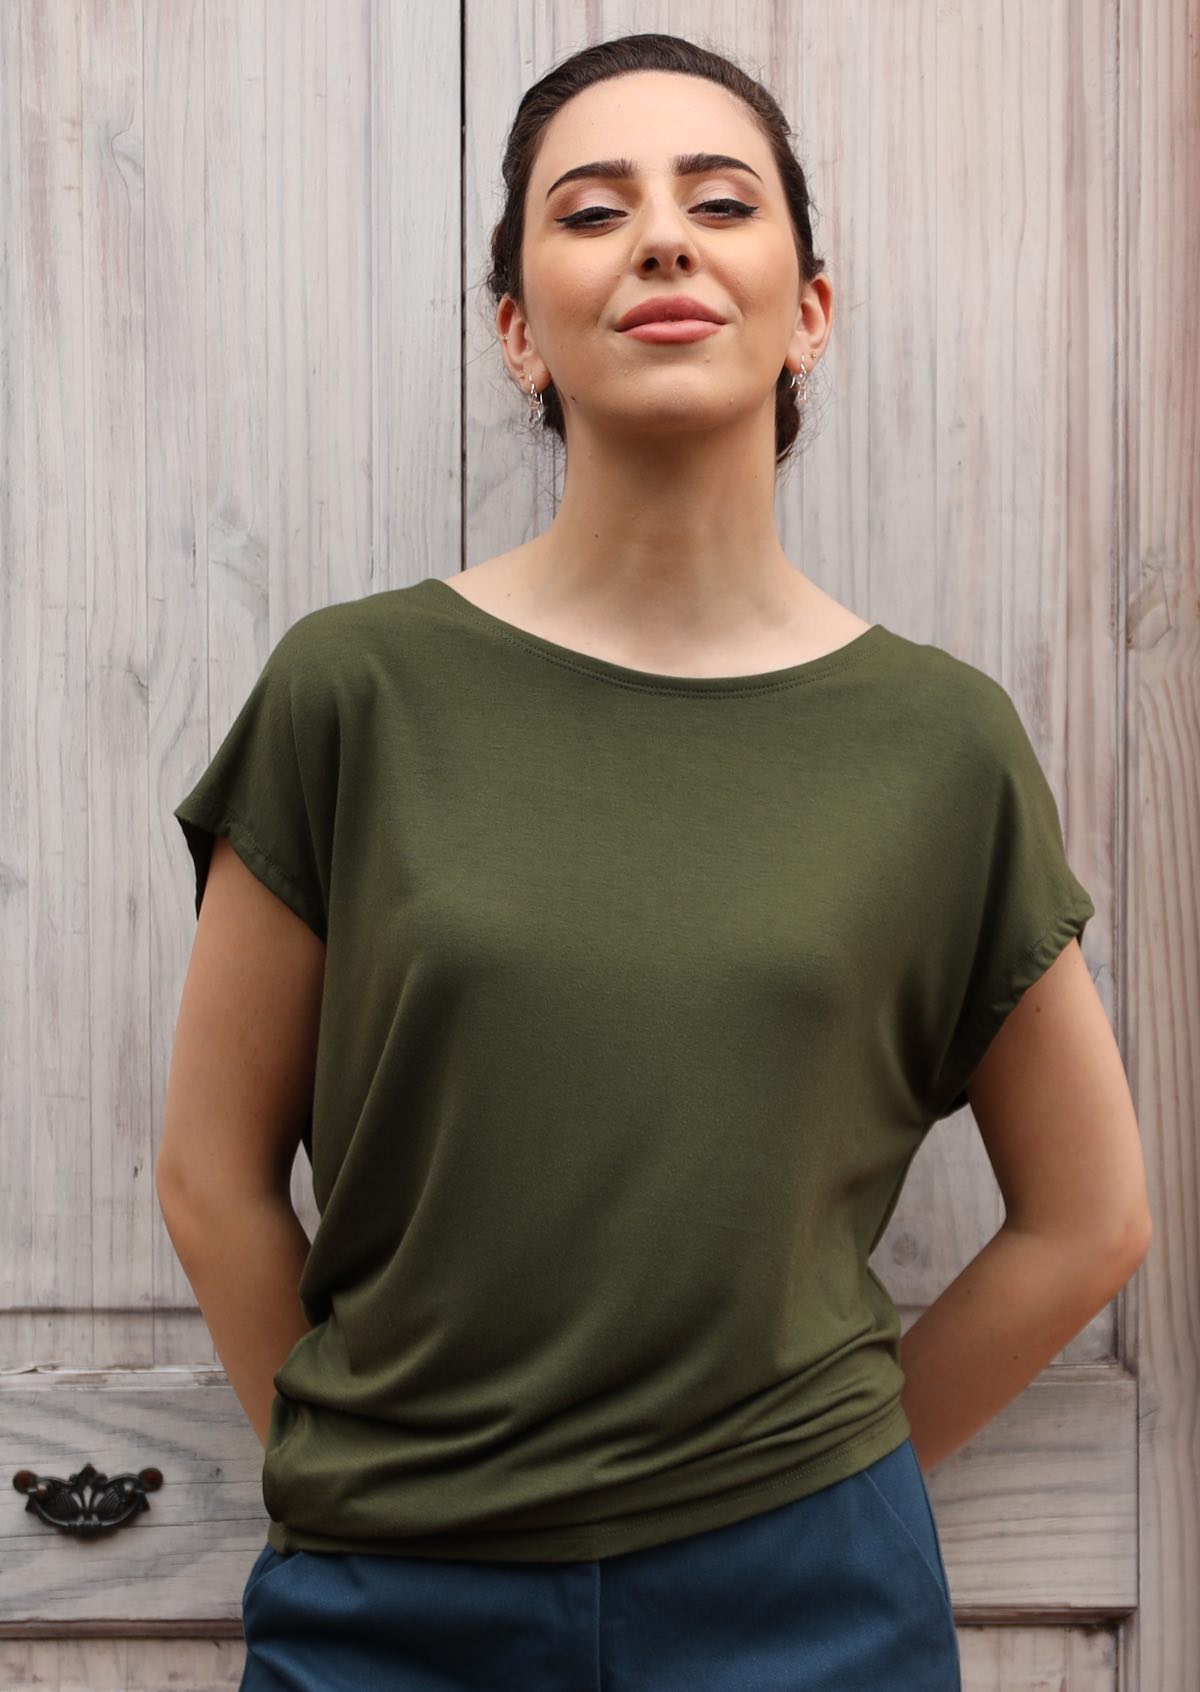 Woman wearing asymmetrical rayon olive green top